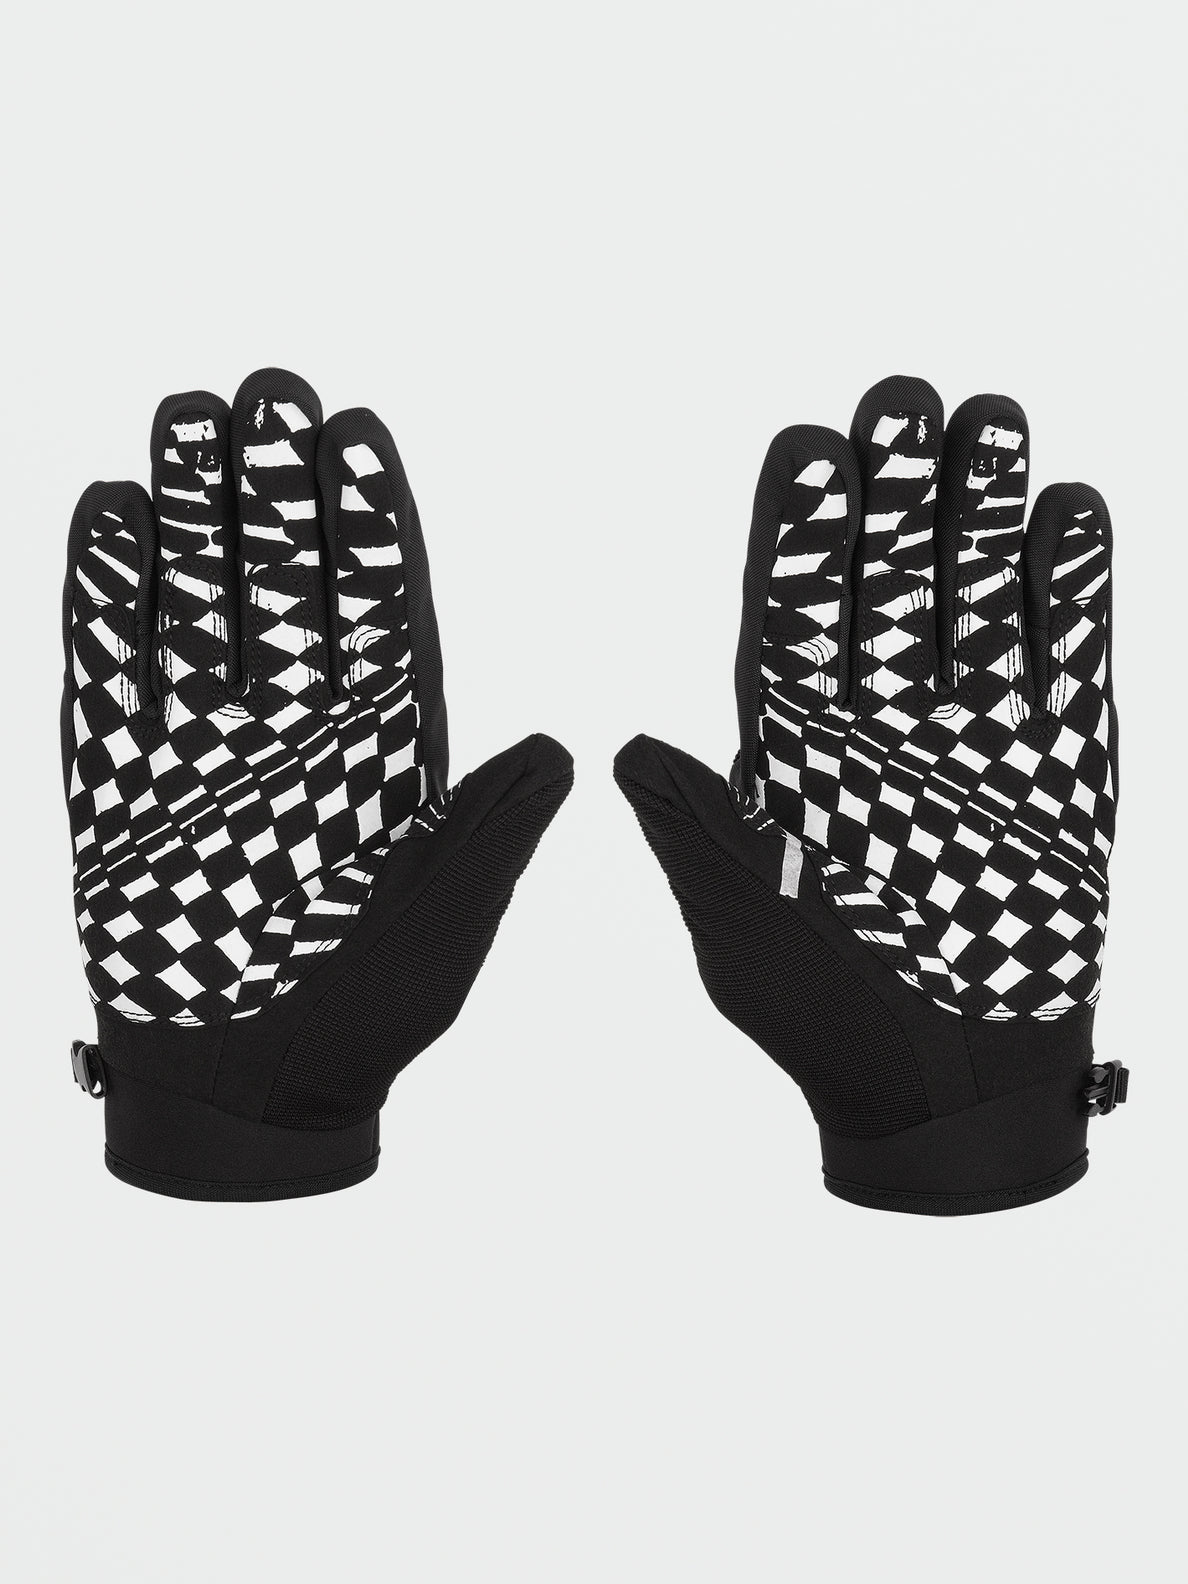 Volcom Crail Glove Black